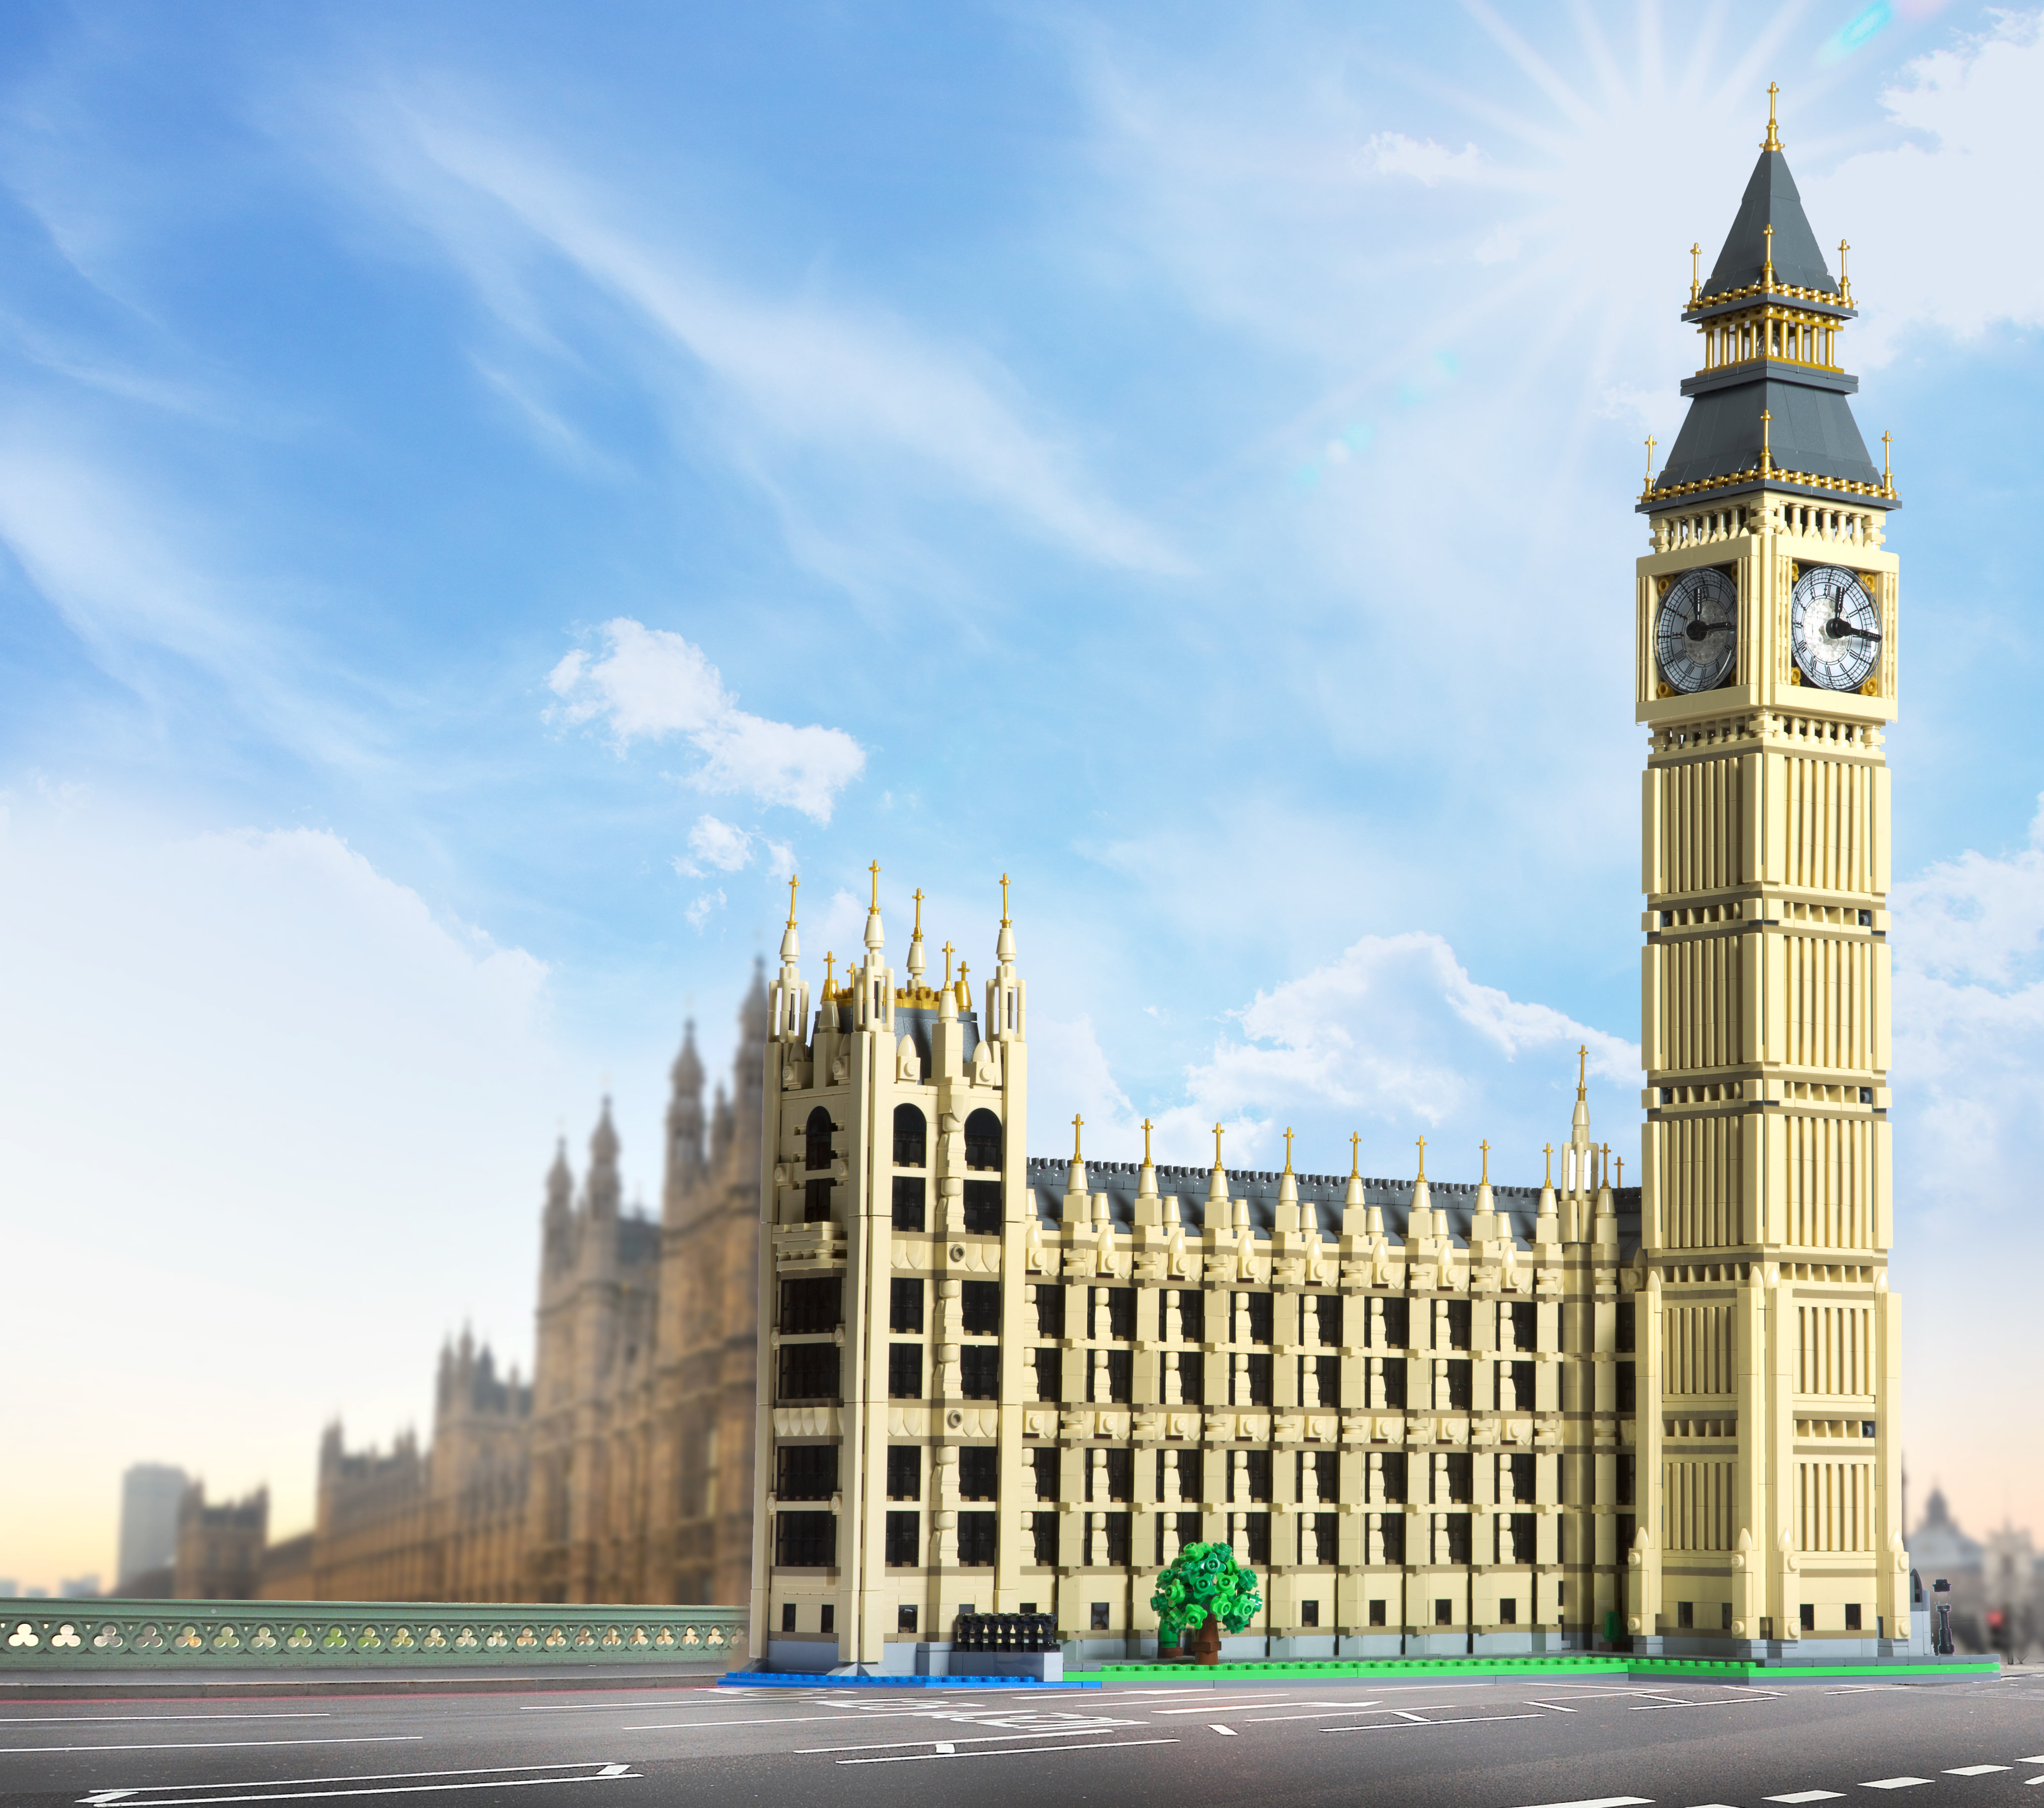 lego houses of parliament